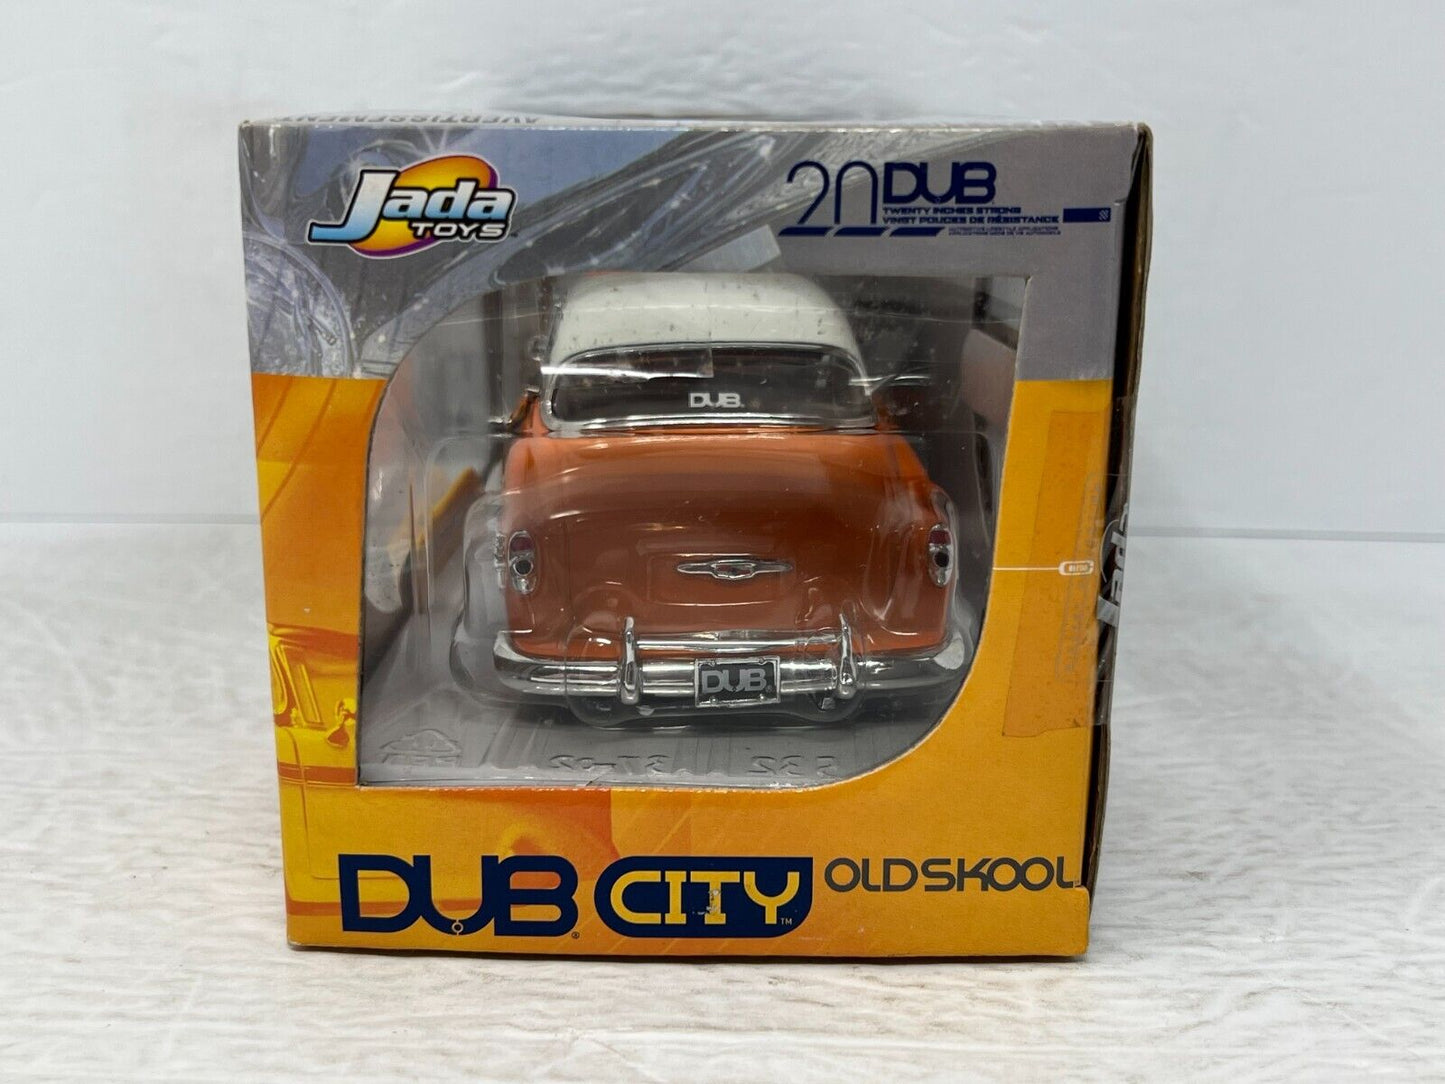 Jada Dub City 1953 Chevy Belair Maya Wheels 1:24 Diecast